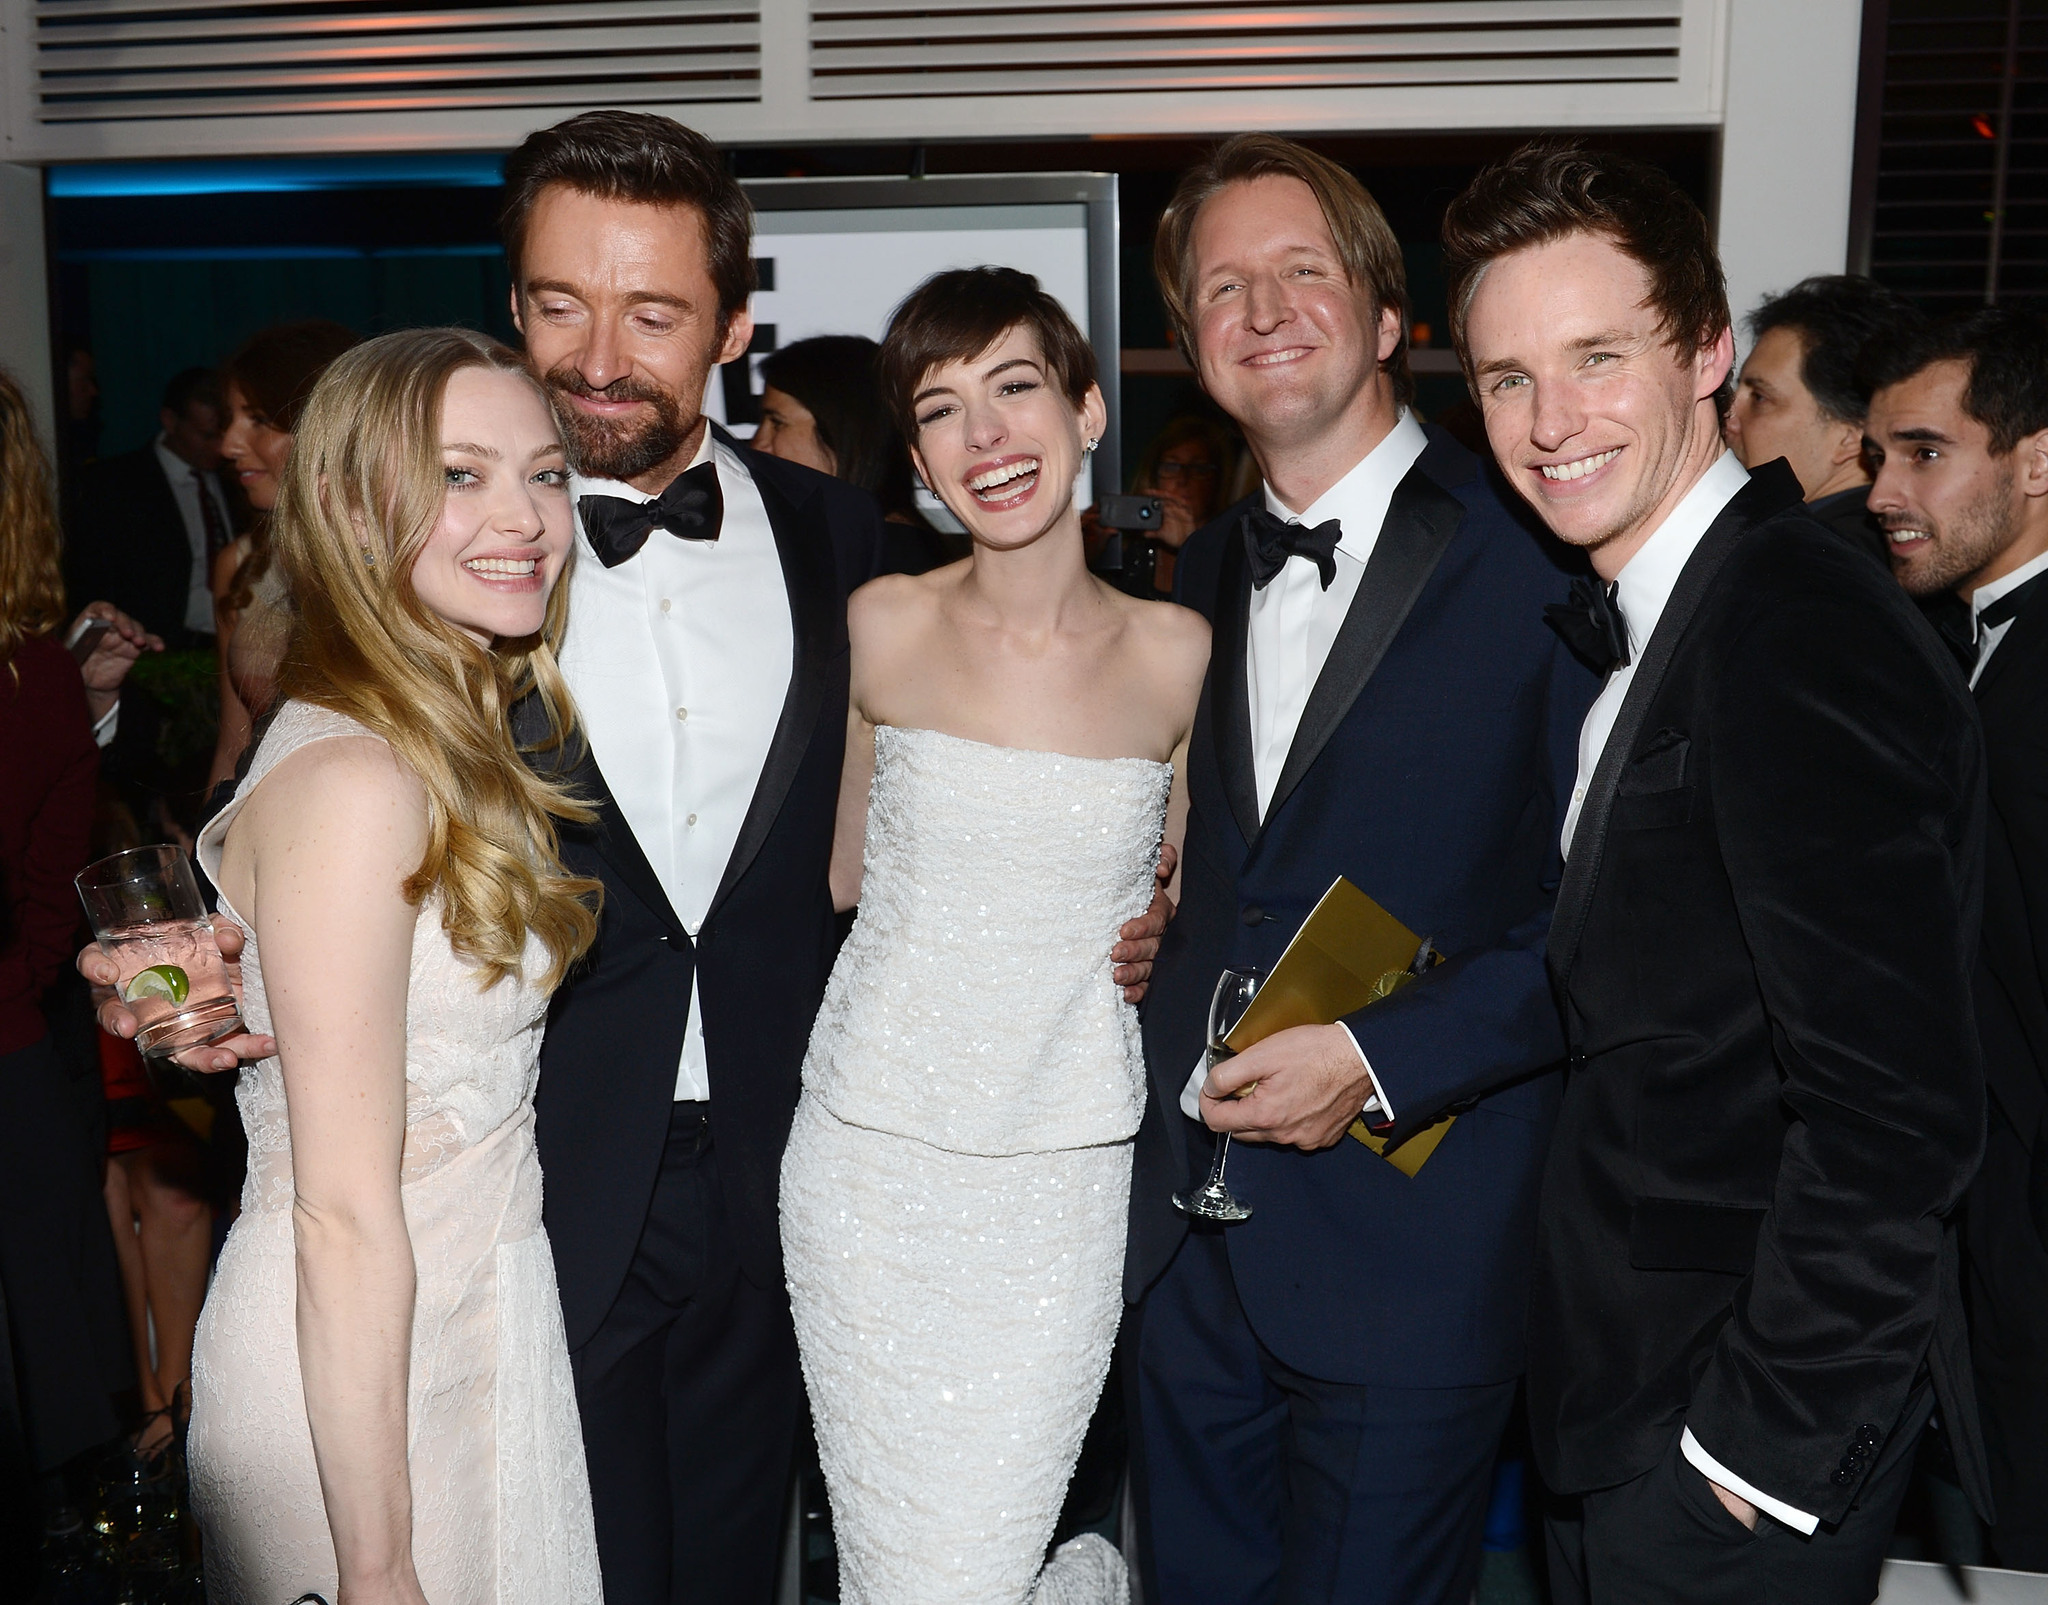 Anne Hathaway, Tom Hooper, Hugh Jackman, Amanda Seyfried and Eddie Redmayne